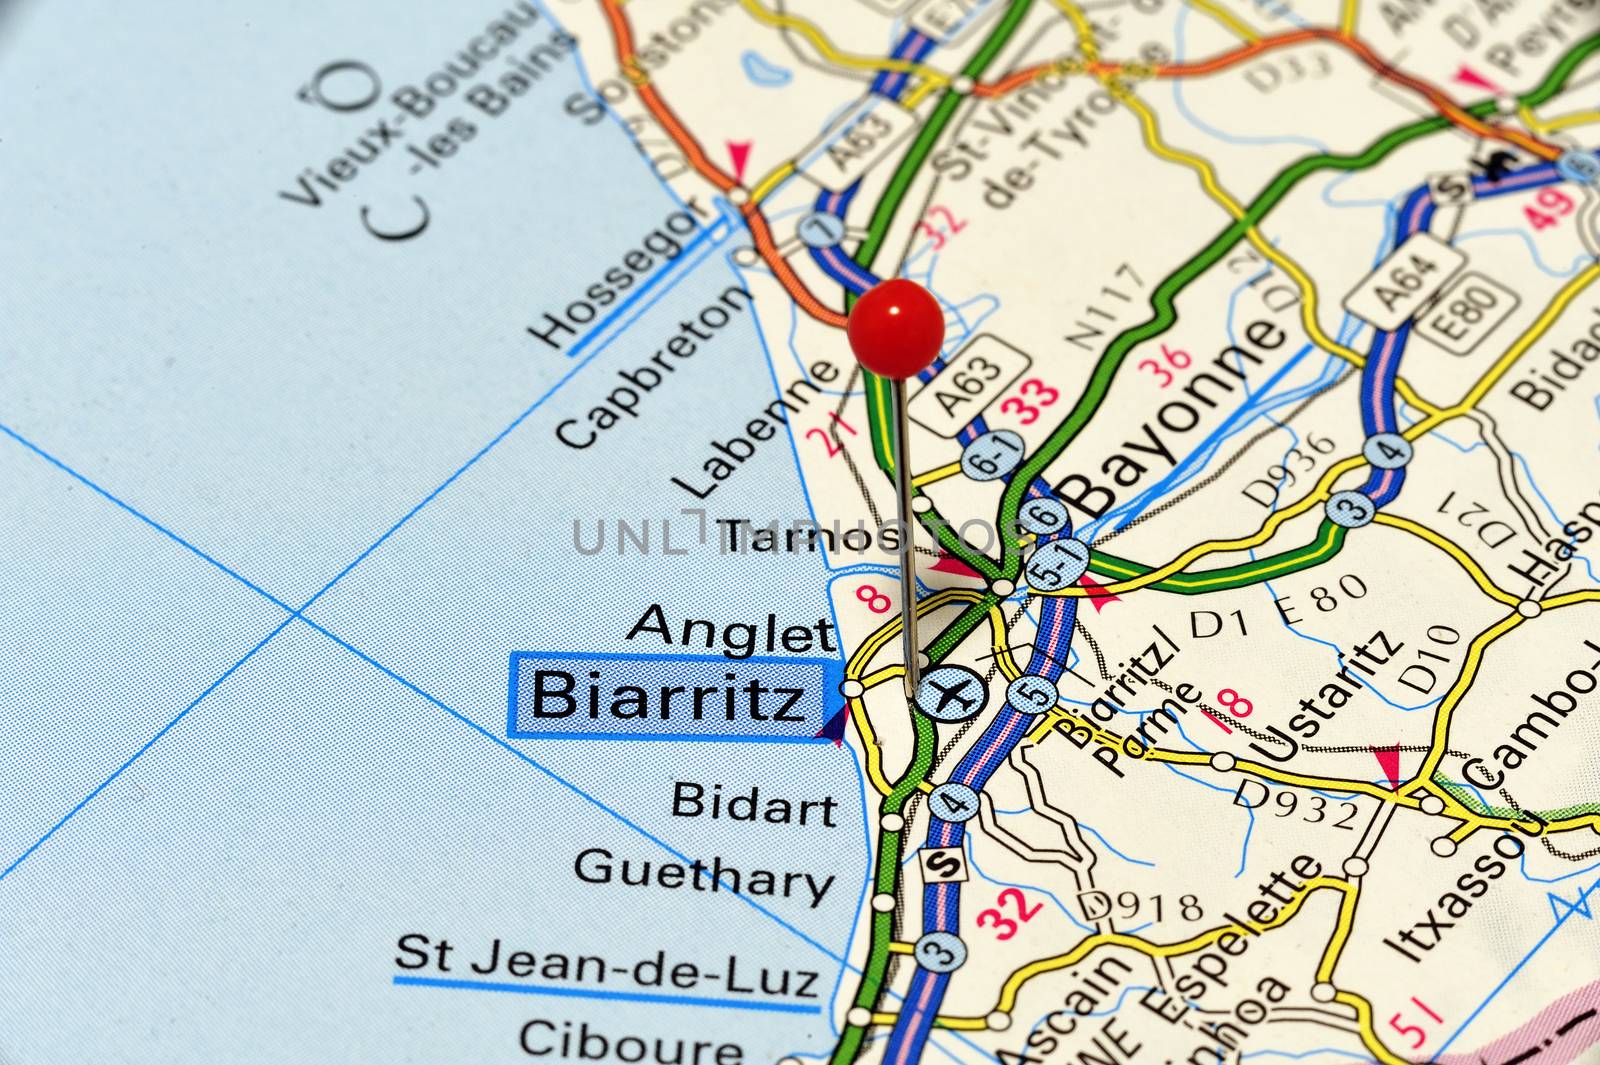 European cities on map series: Biarritz